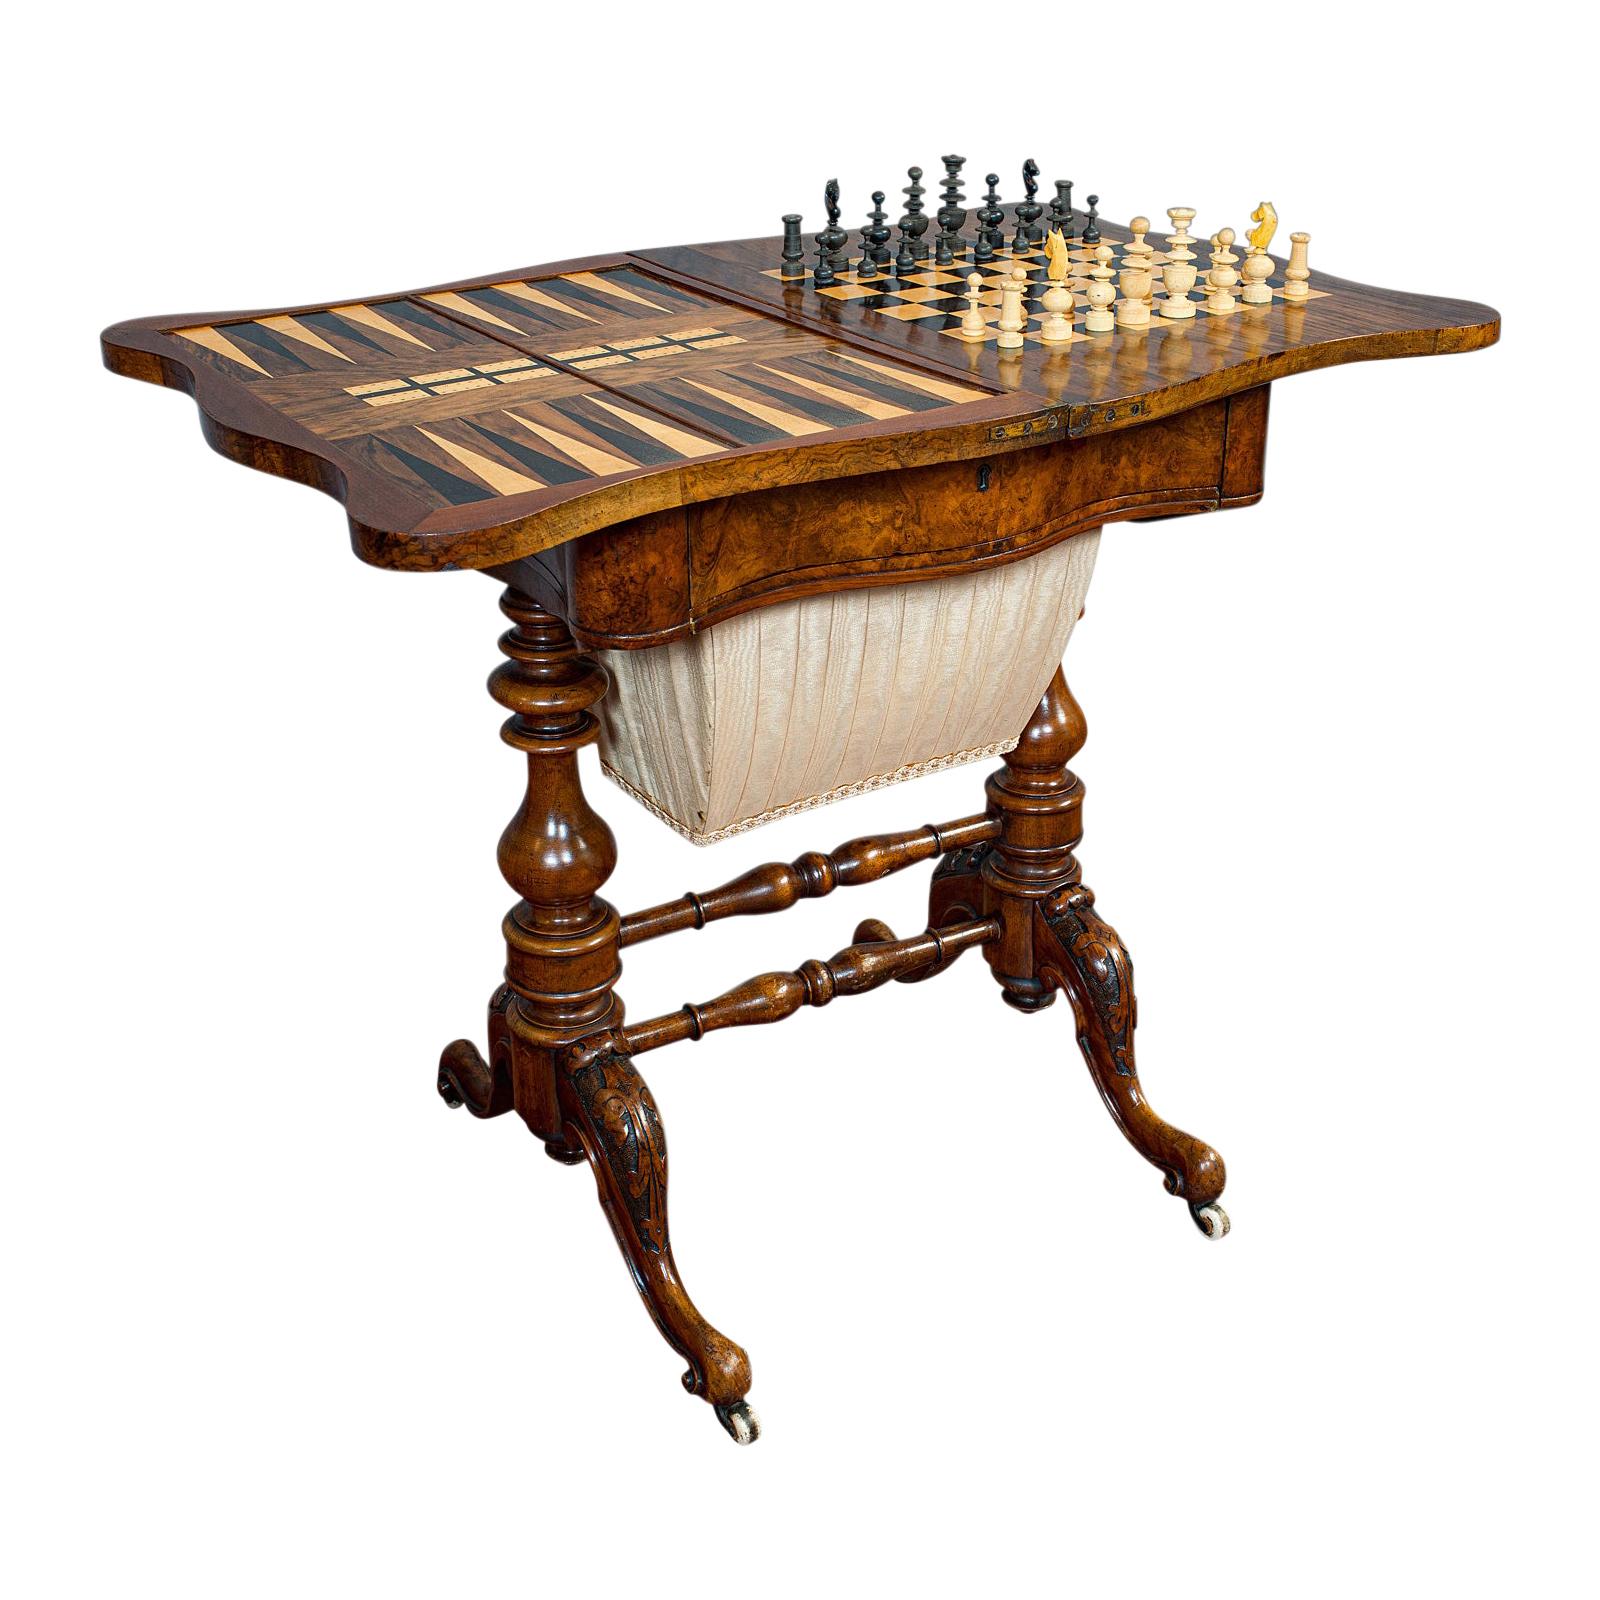 Antique Games Table, English, Walnut, Burr, Chess, Backgammon, Victorian